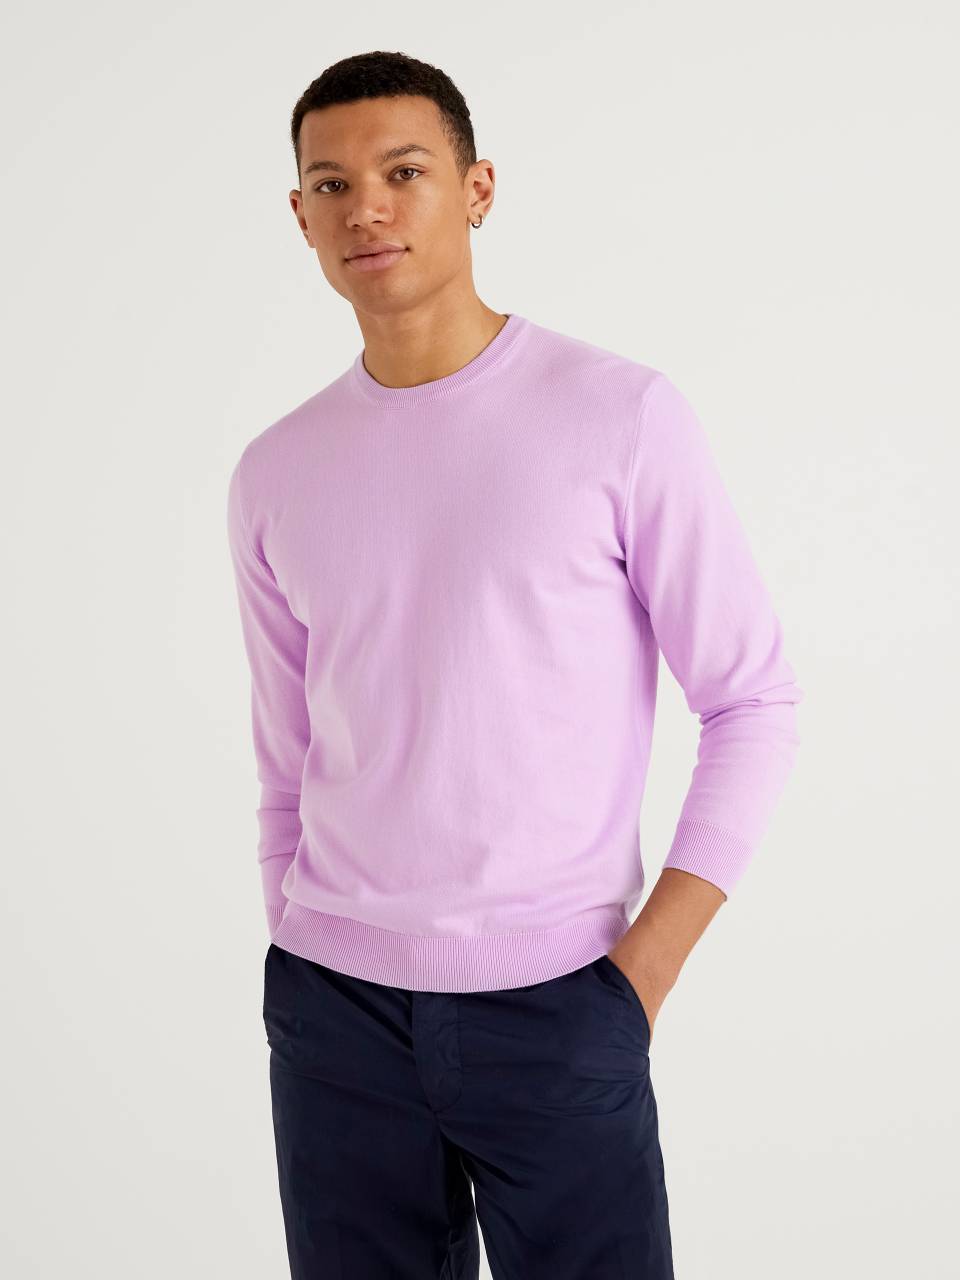 Benetton 100% cotton crew neck sweater. 1